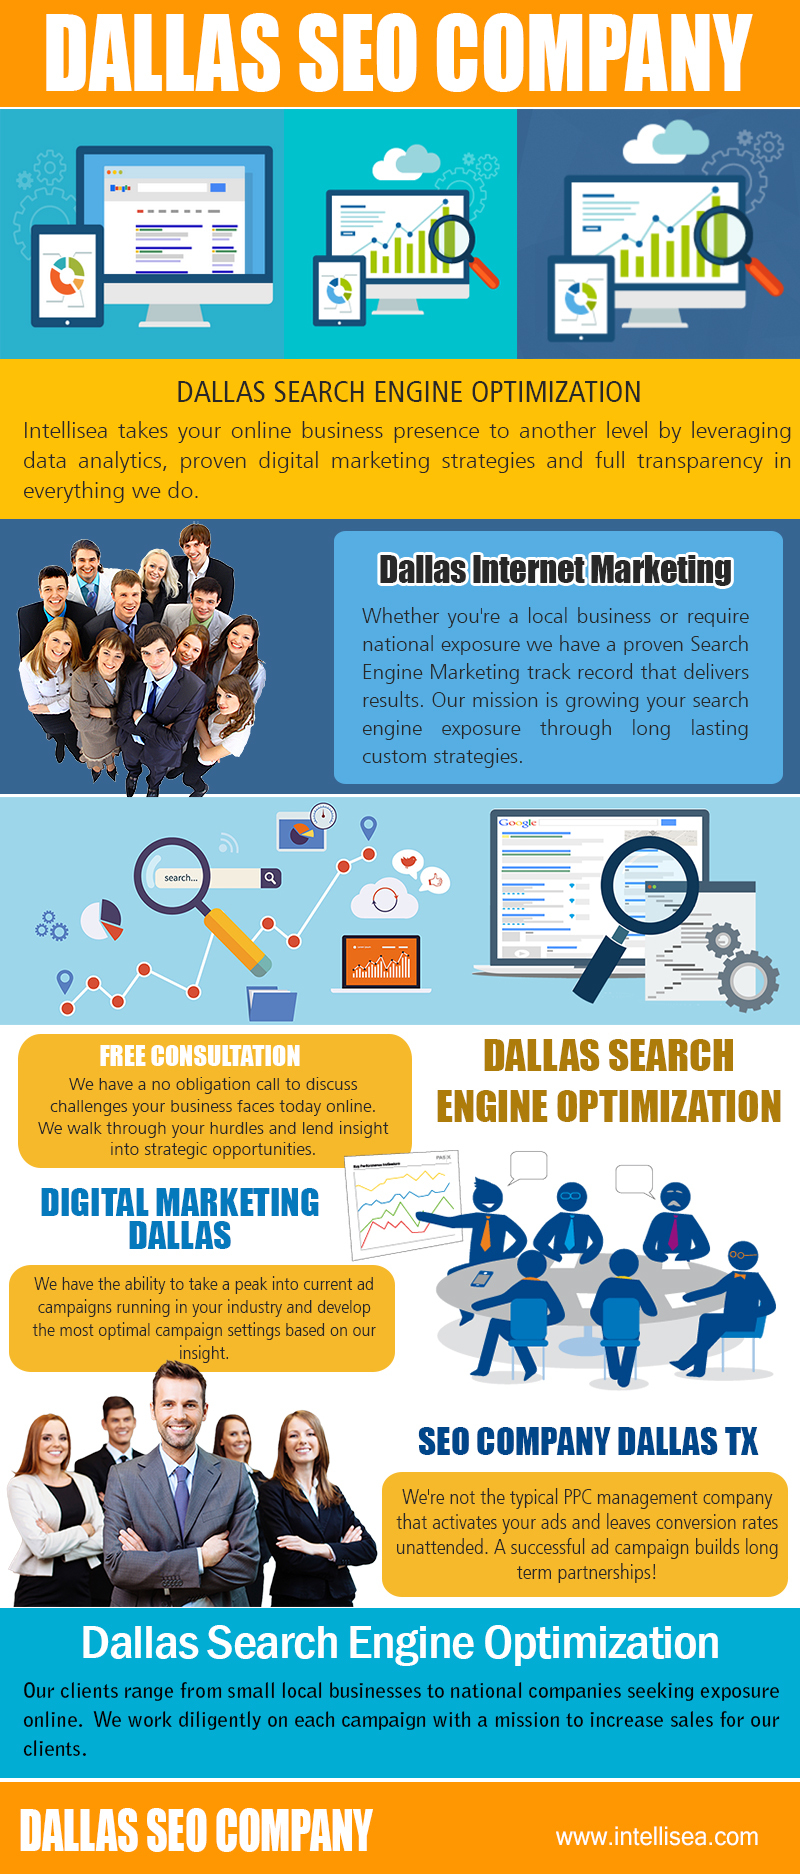 Dallas Search Engine Optimization | intellisea.com